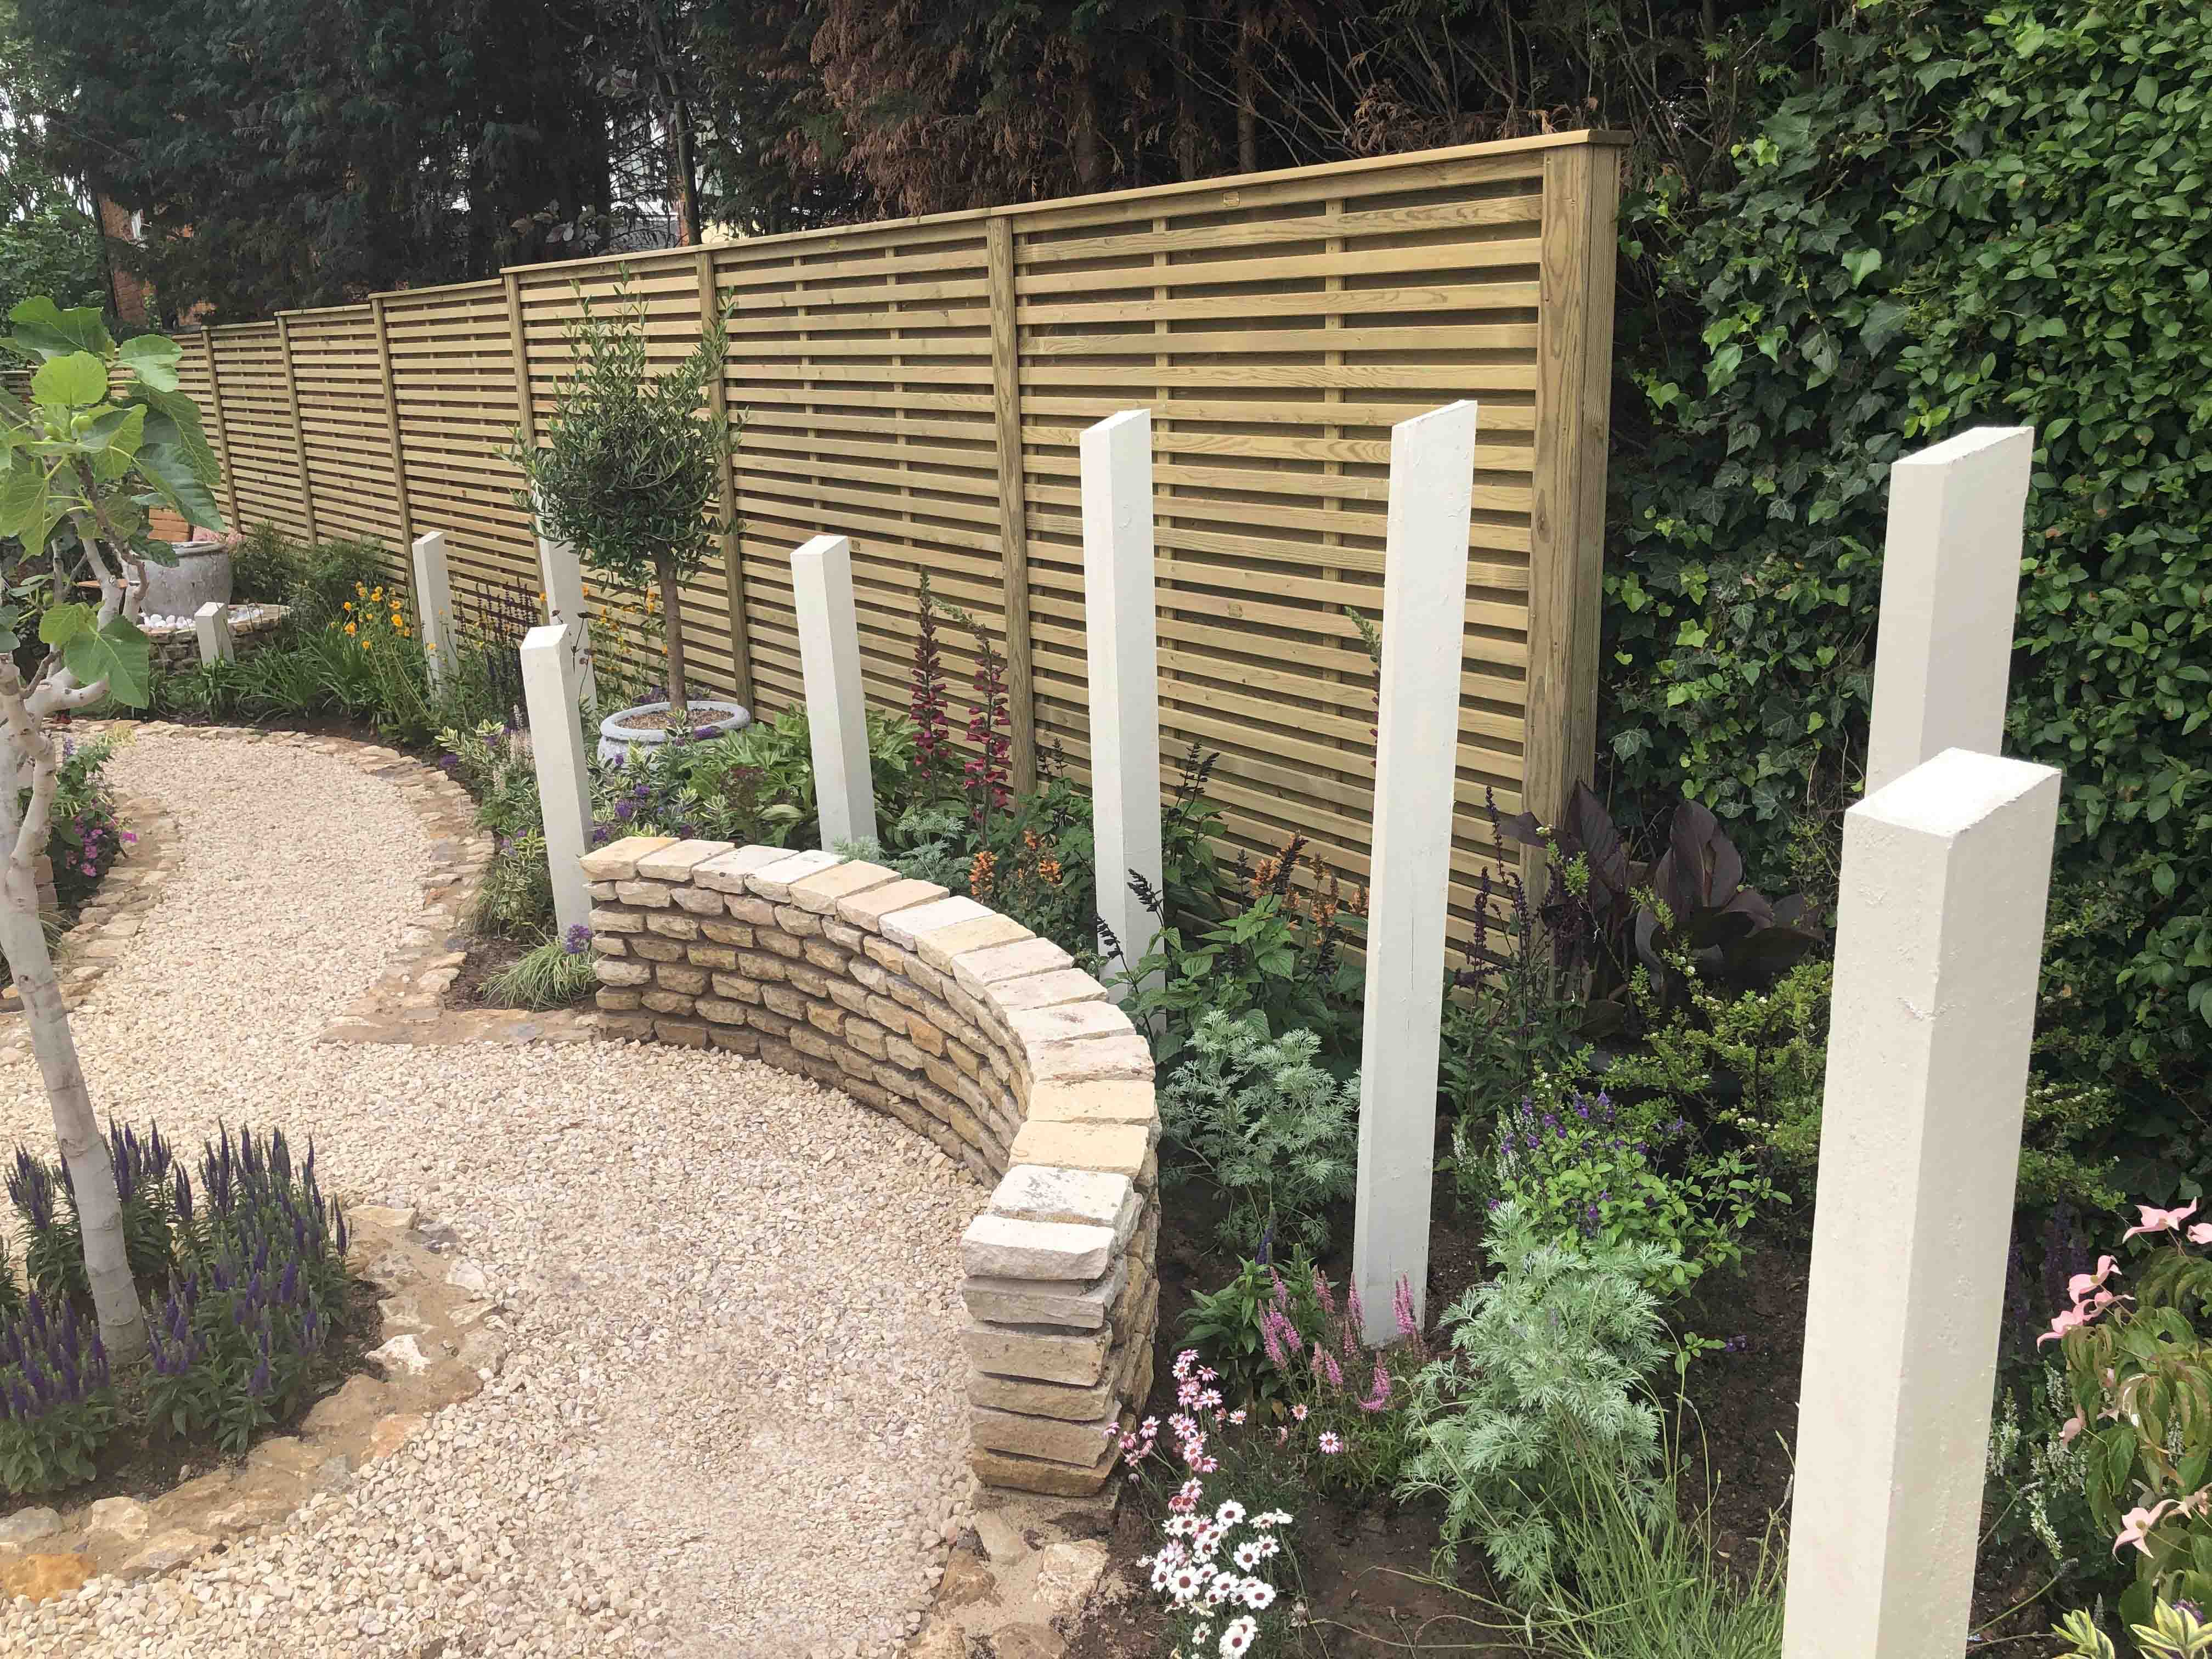 Designer slatted fencing ITV Love Your Garden